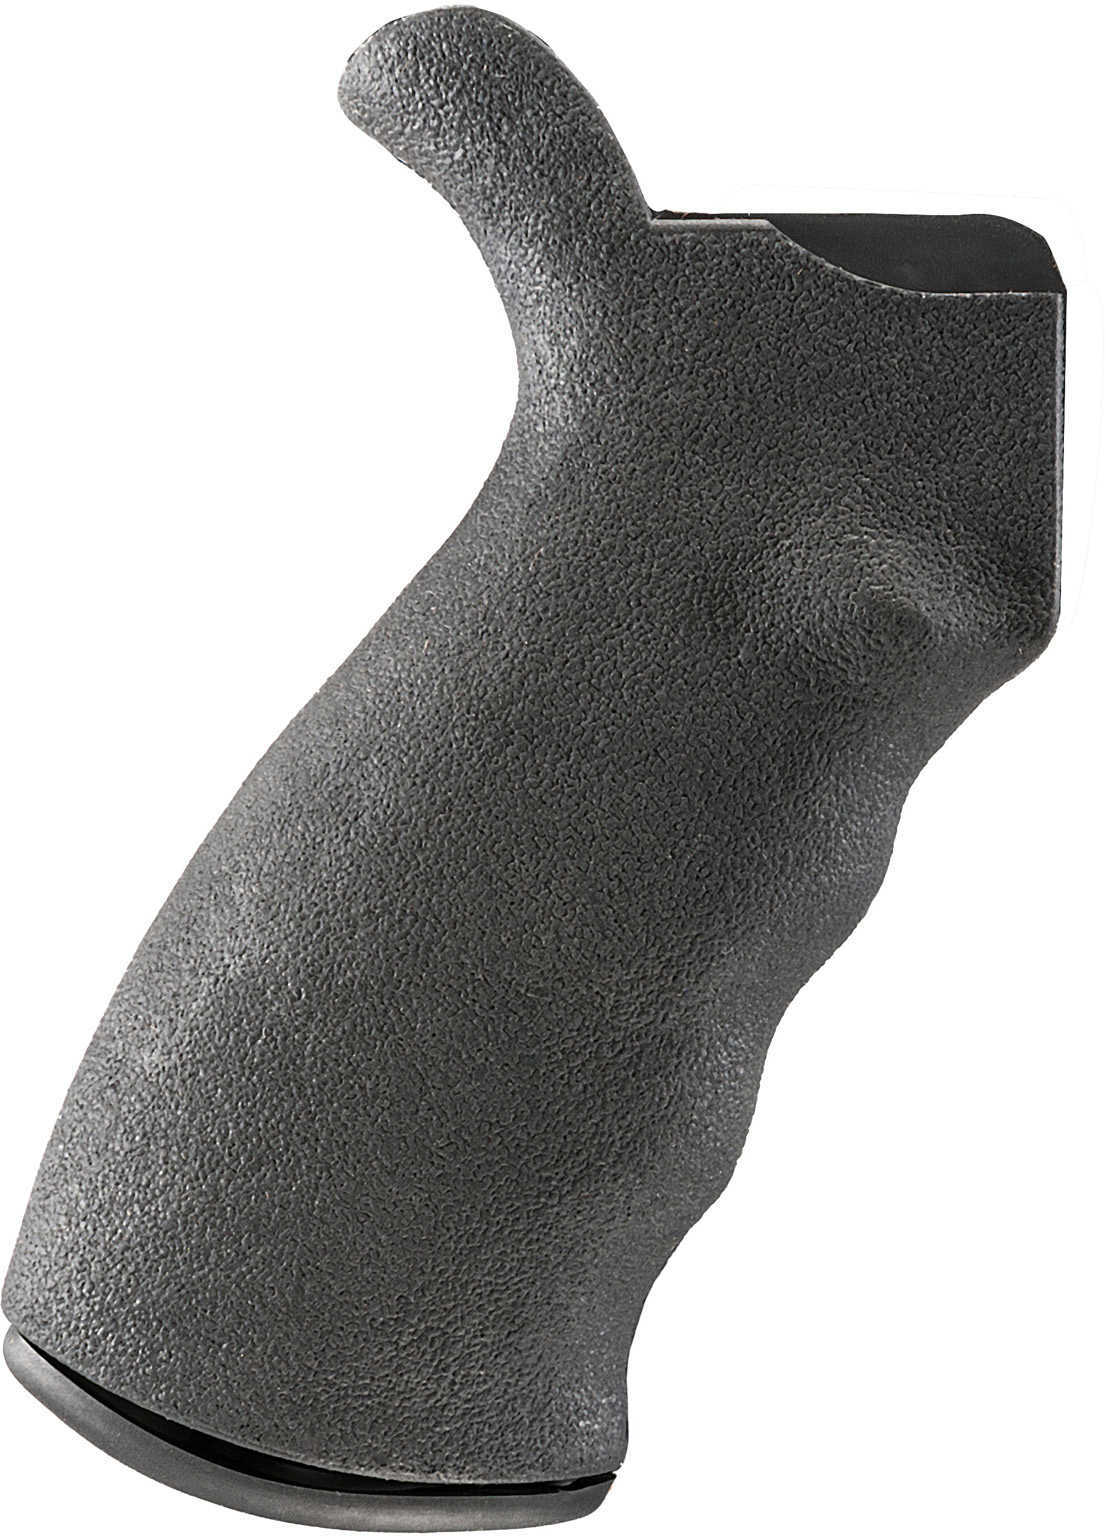 Ergo AR 15/M16 Grip Kit Right Hand Black Large Frame 4000 LF-BK